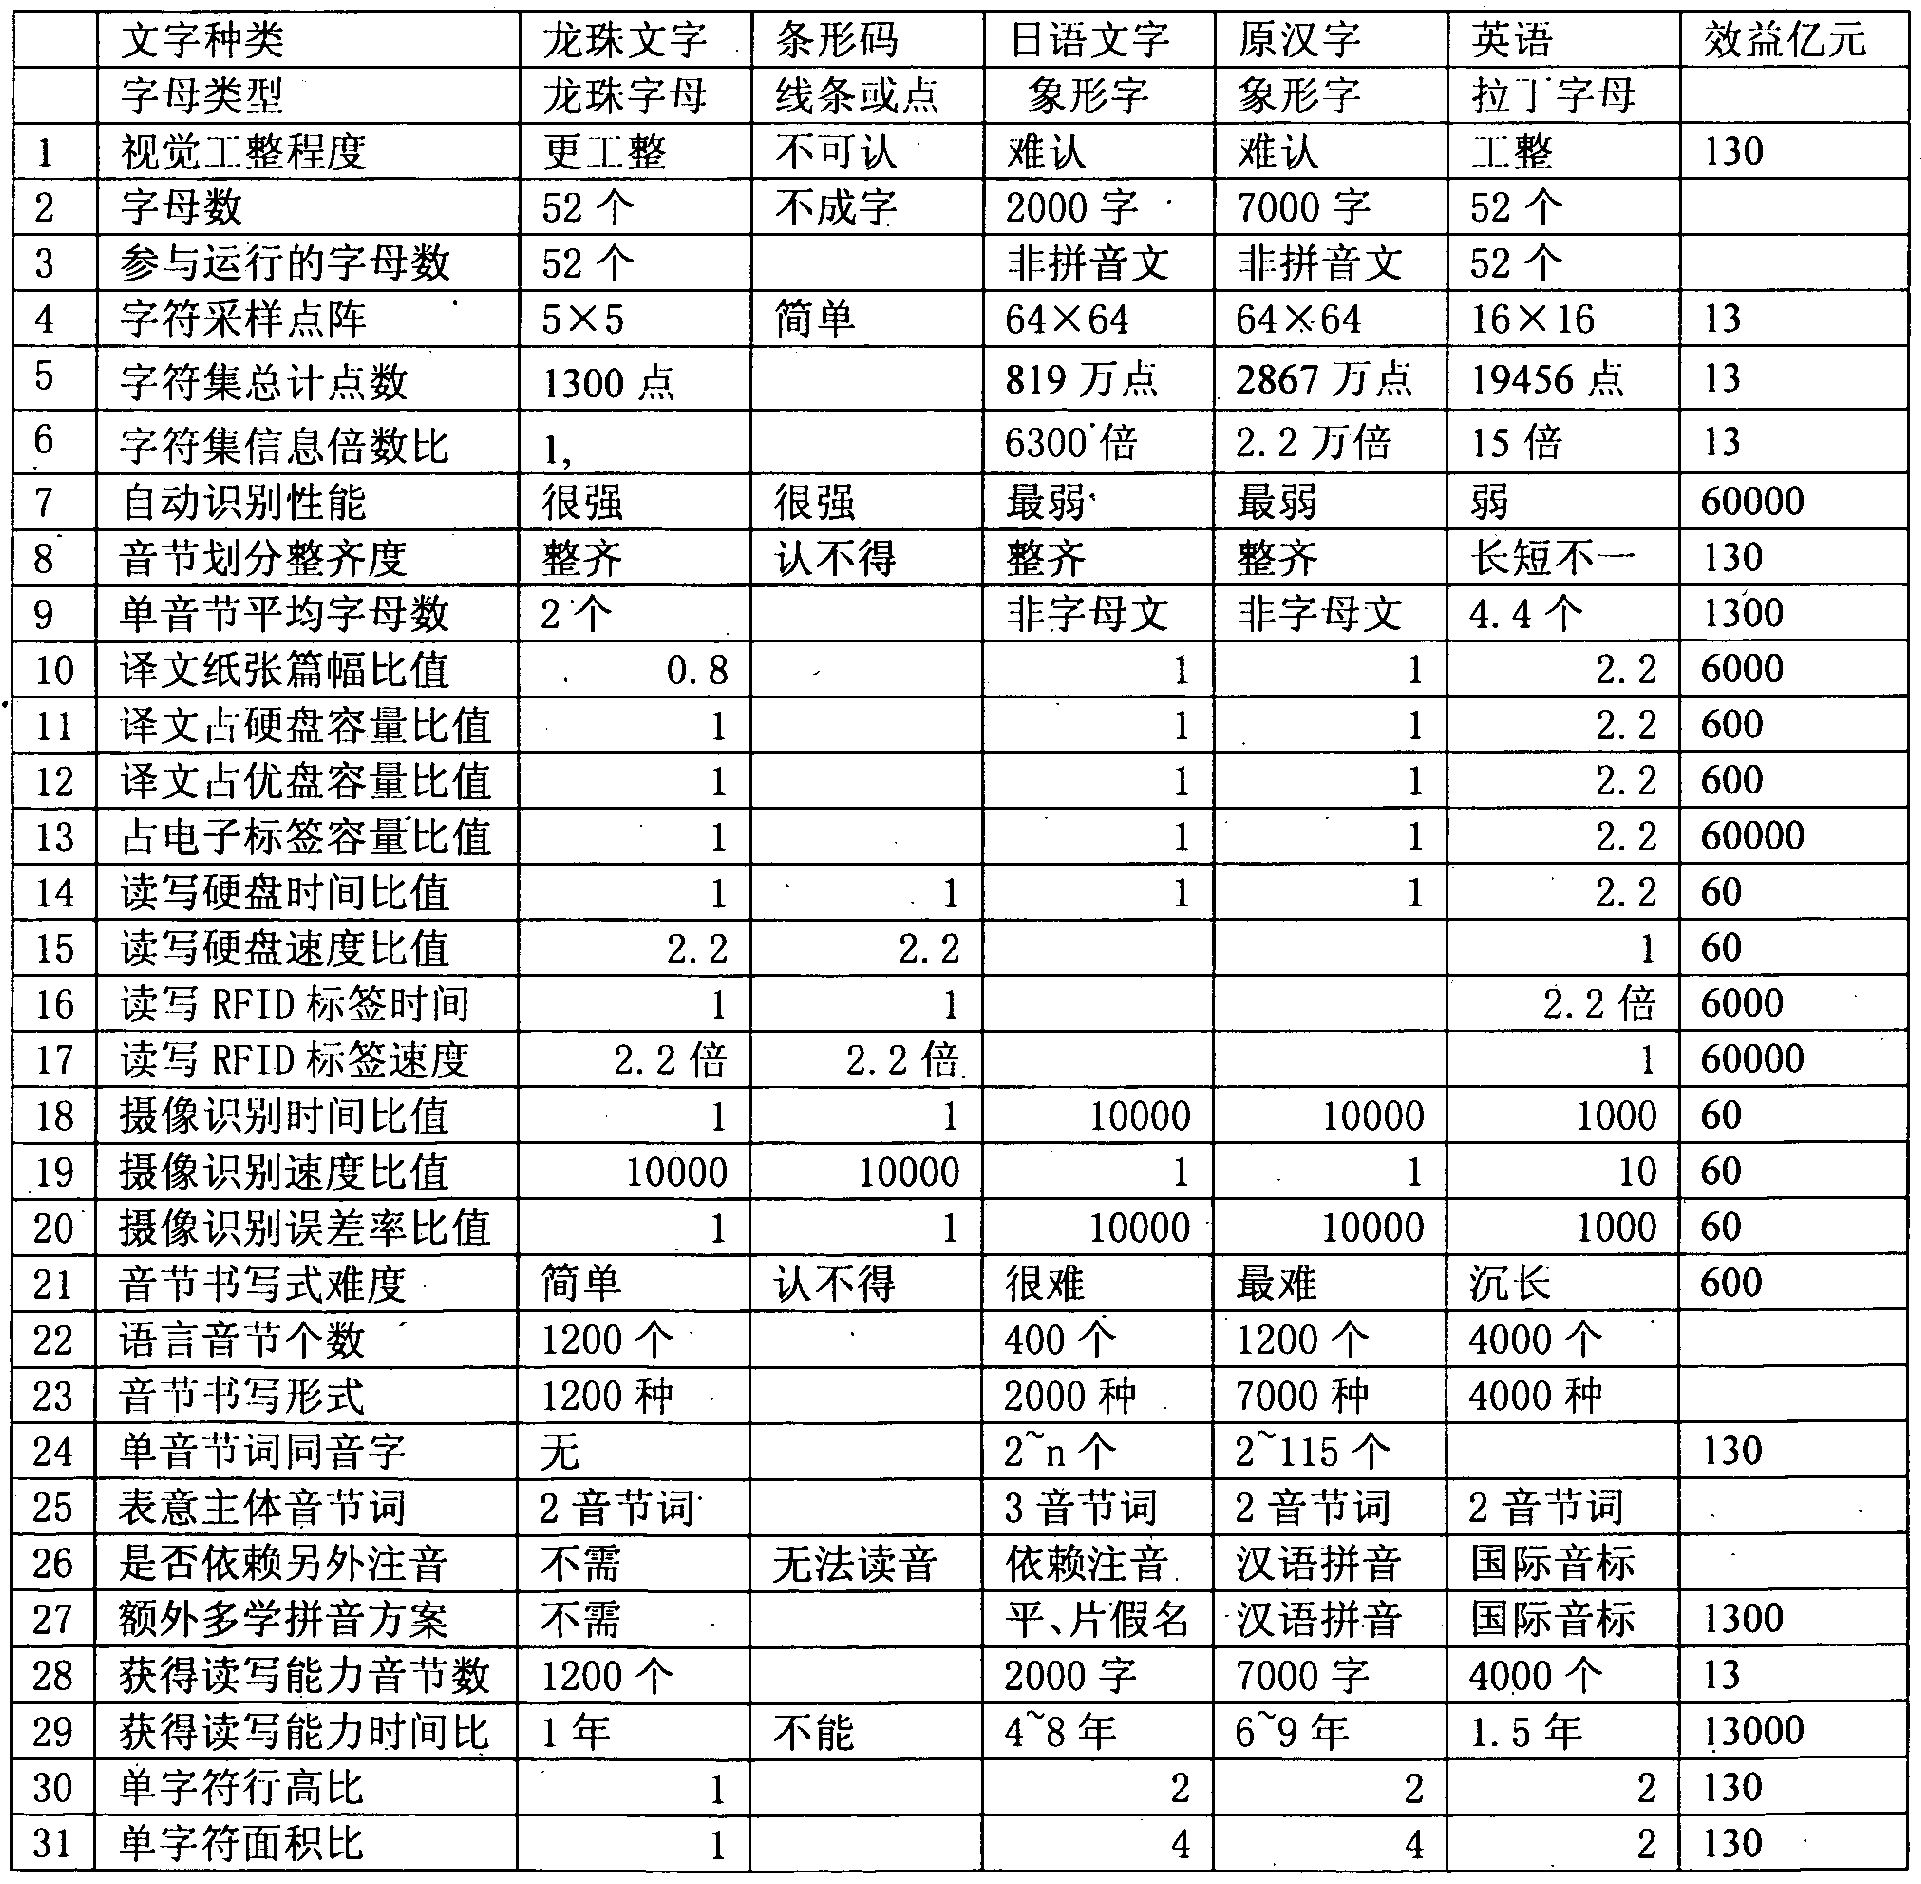 Chinese Character Stroke Order Worksheet Generator